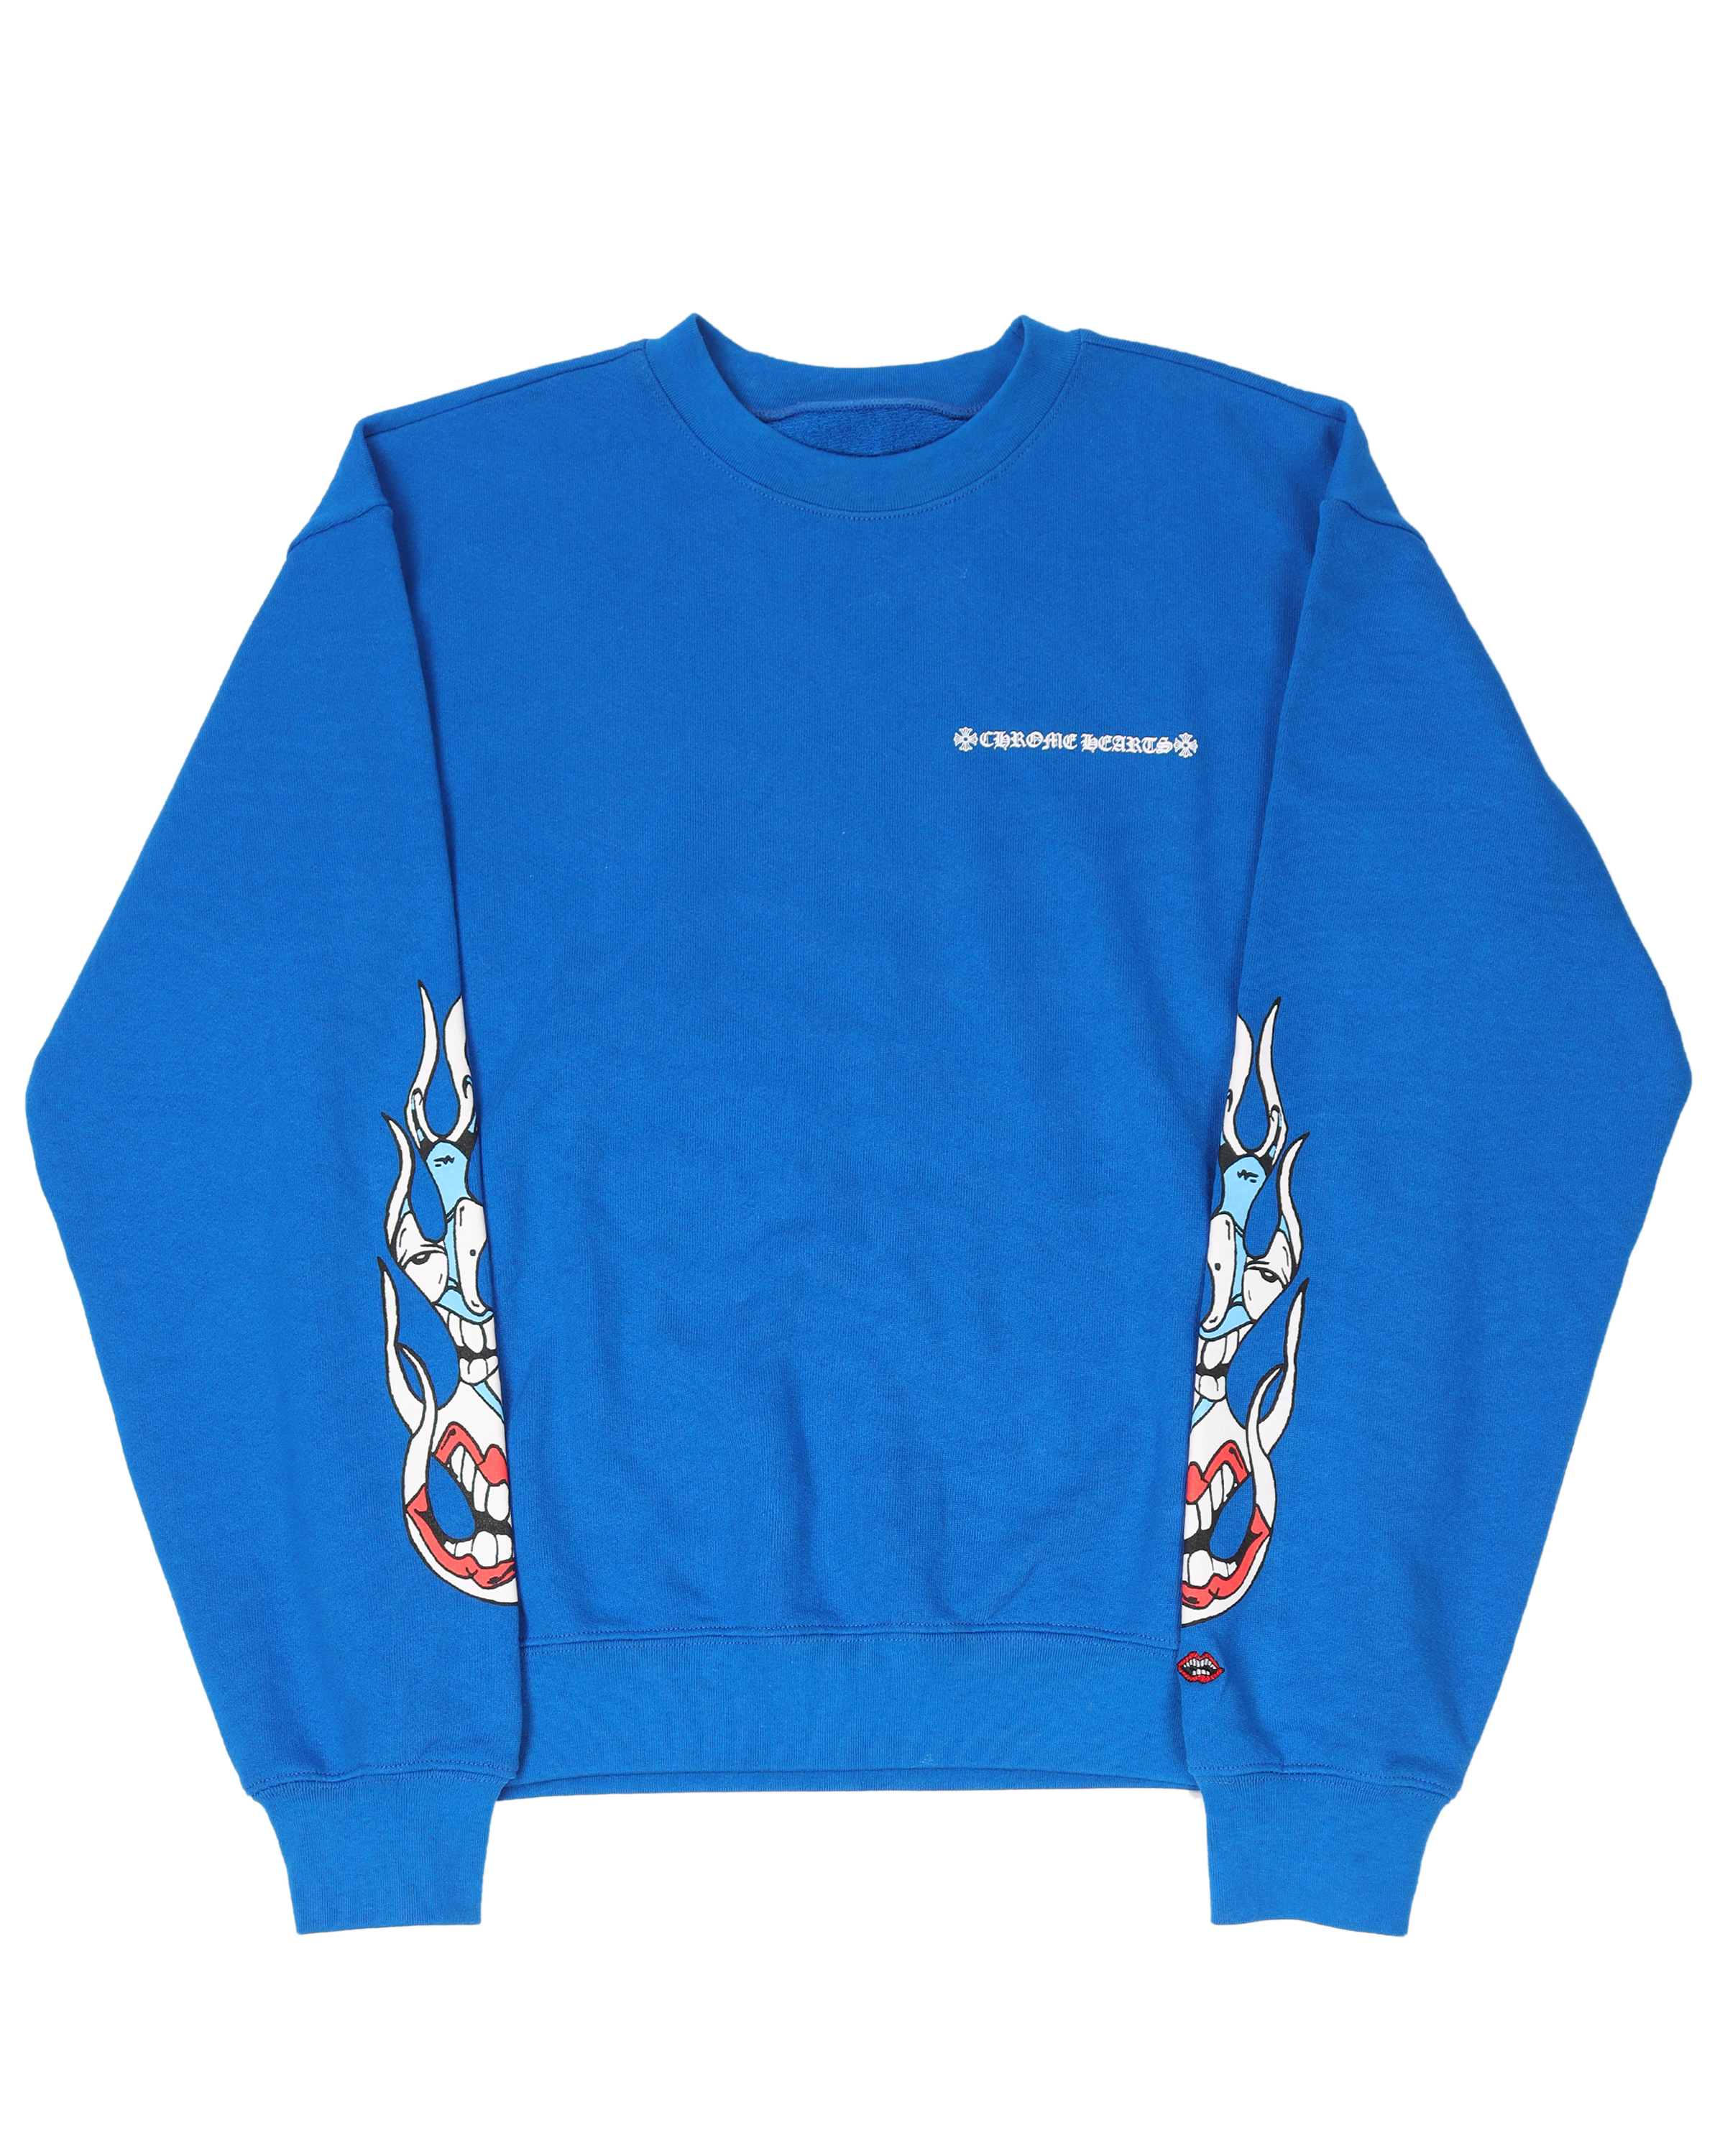 Matty Boy "Space" Sweatshirt